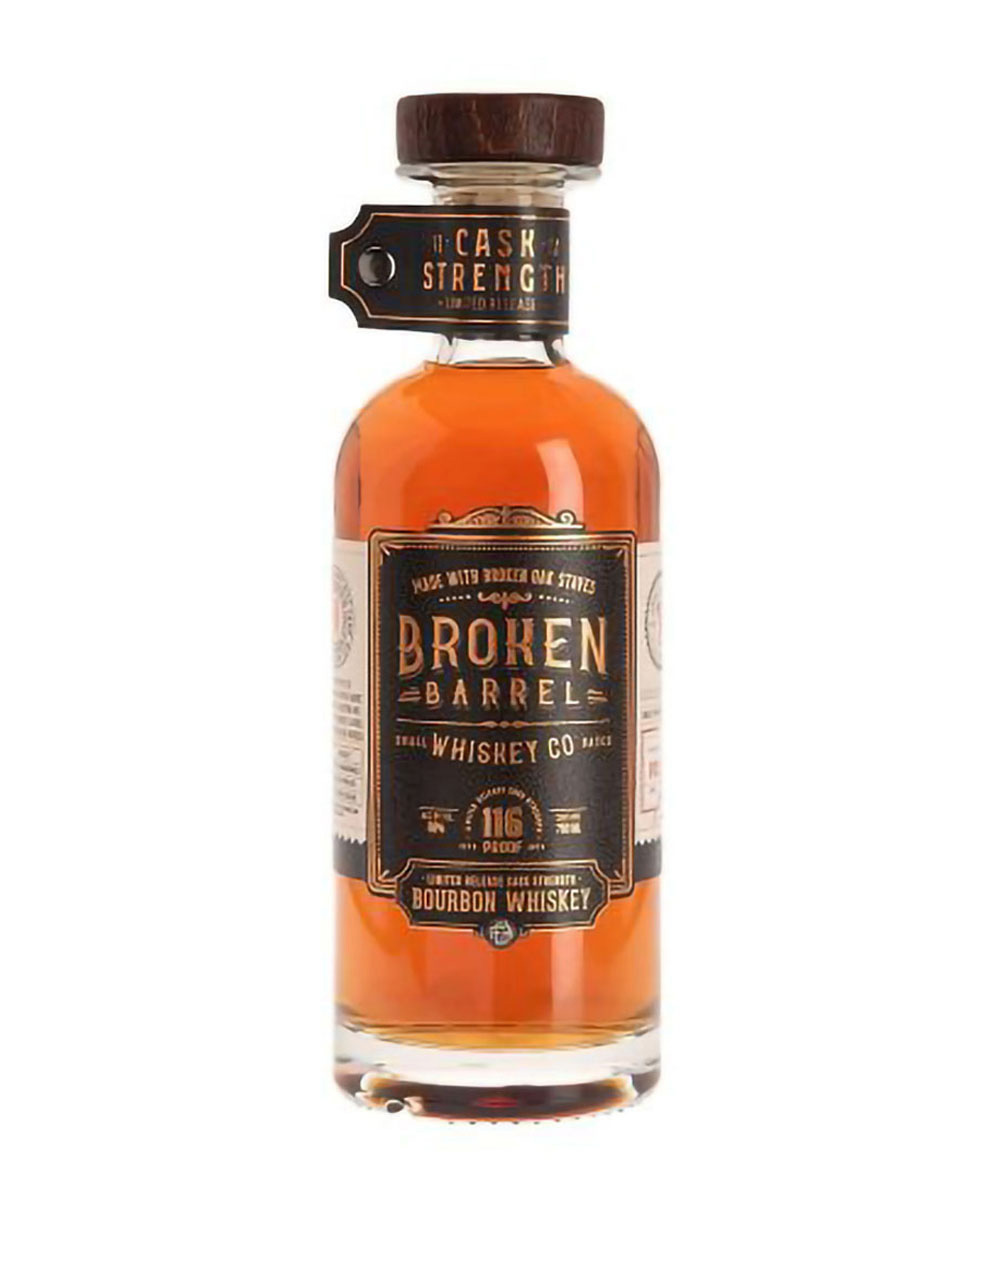 Duke Small Batch Kentucky Straight Bourbon Whiskey